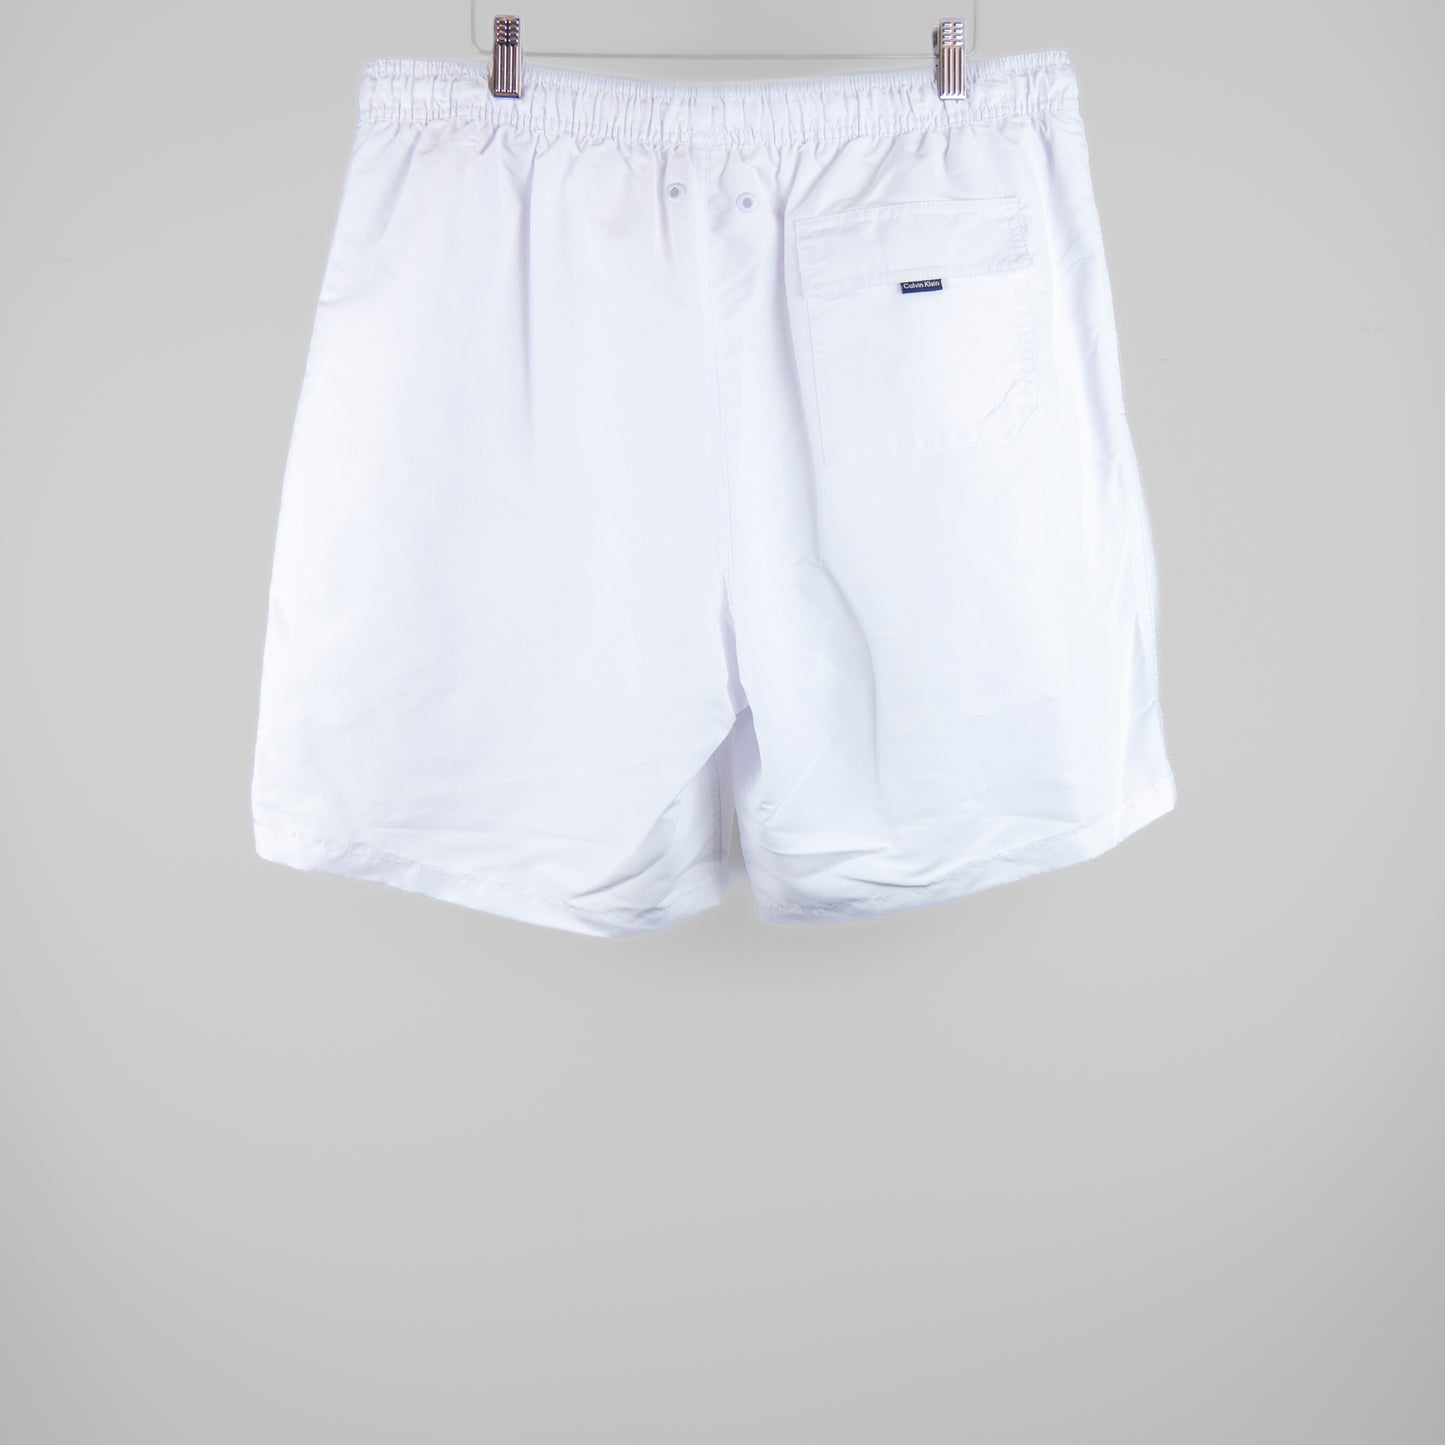 Calvin Klein - Standard UV Protected Quick Dry Swim Trunk - White